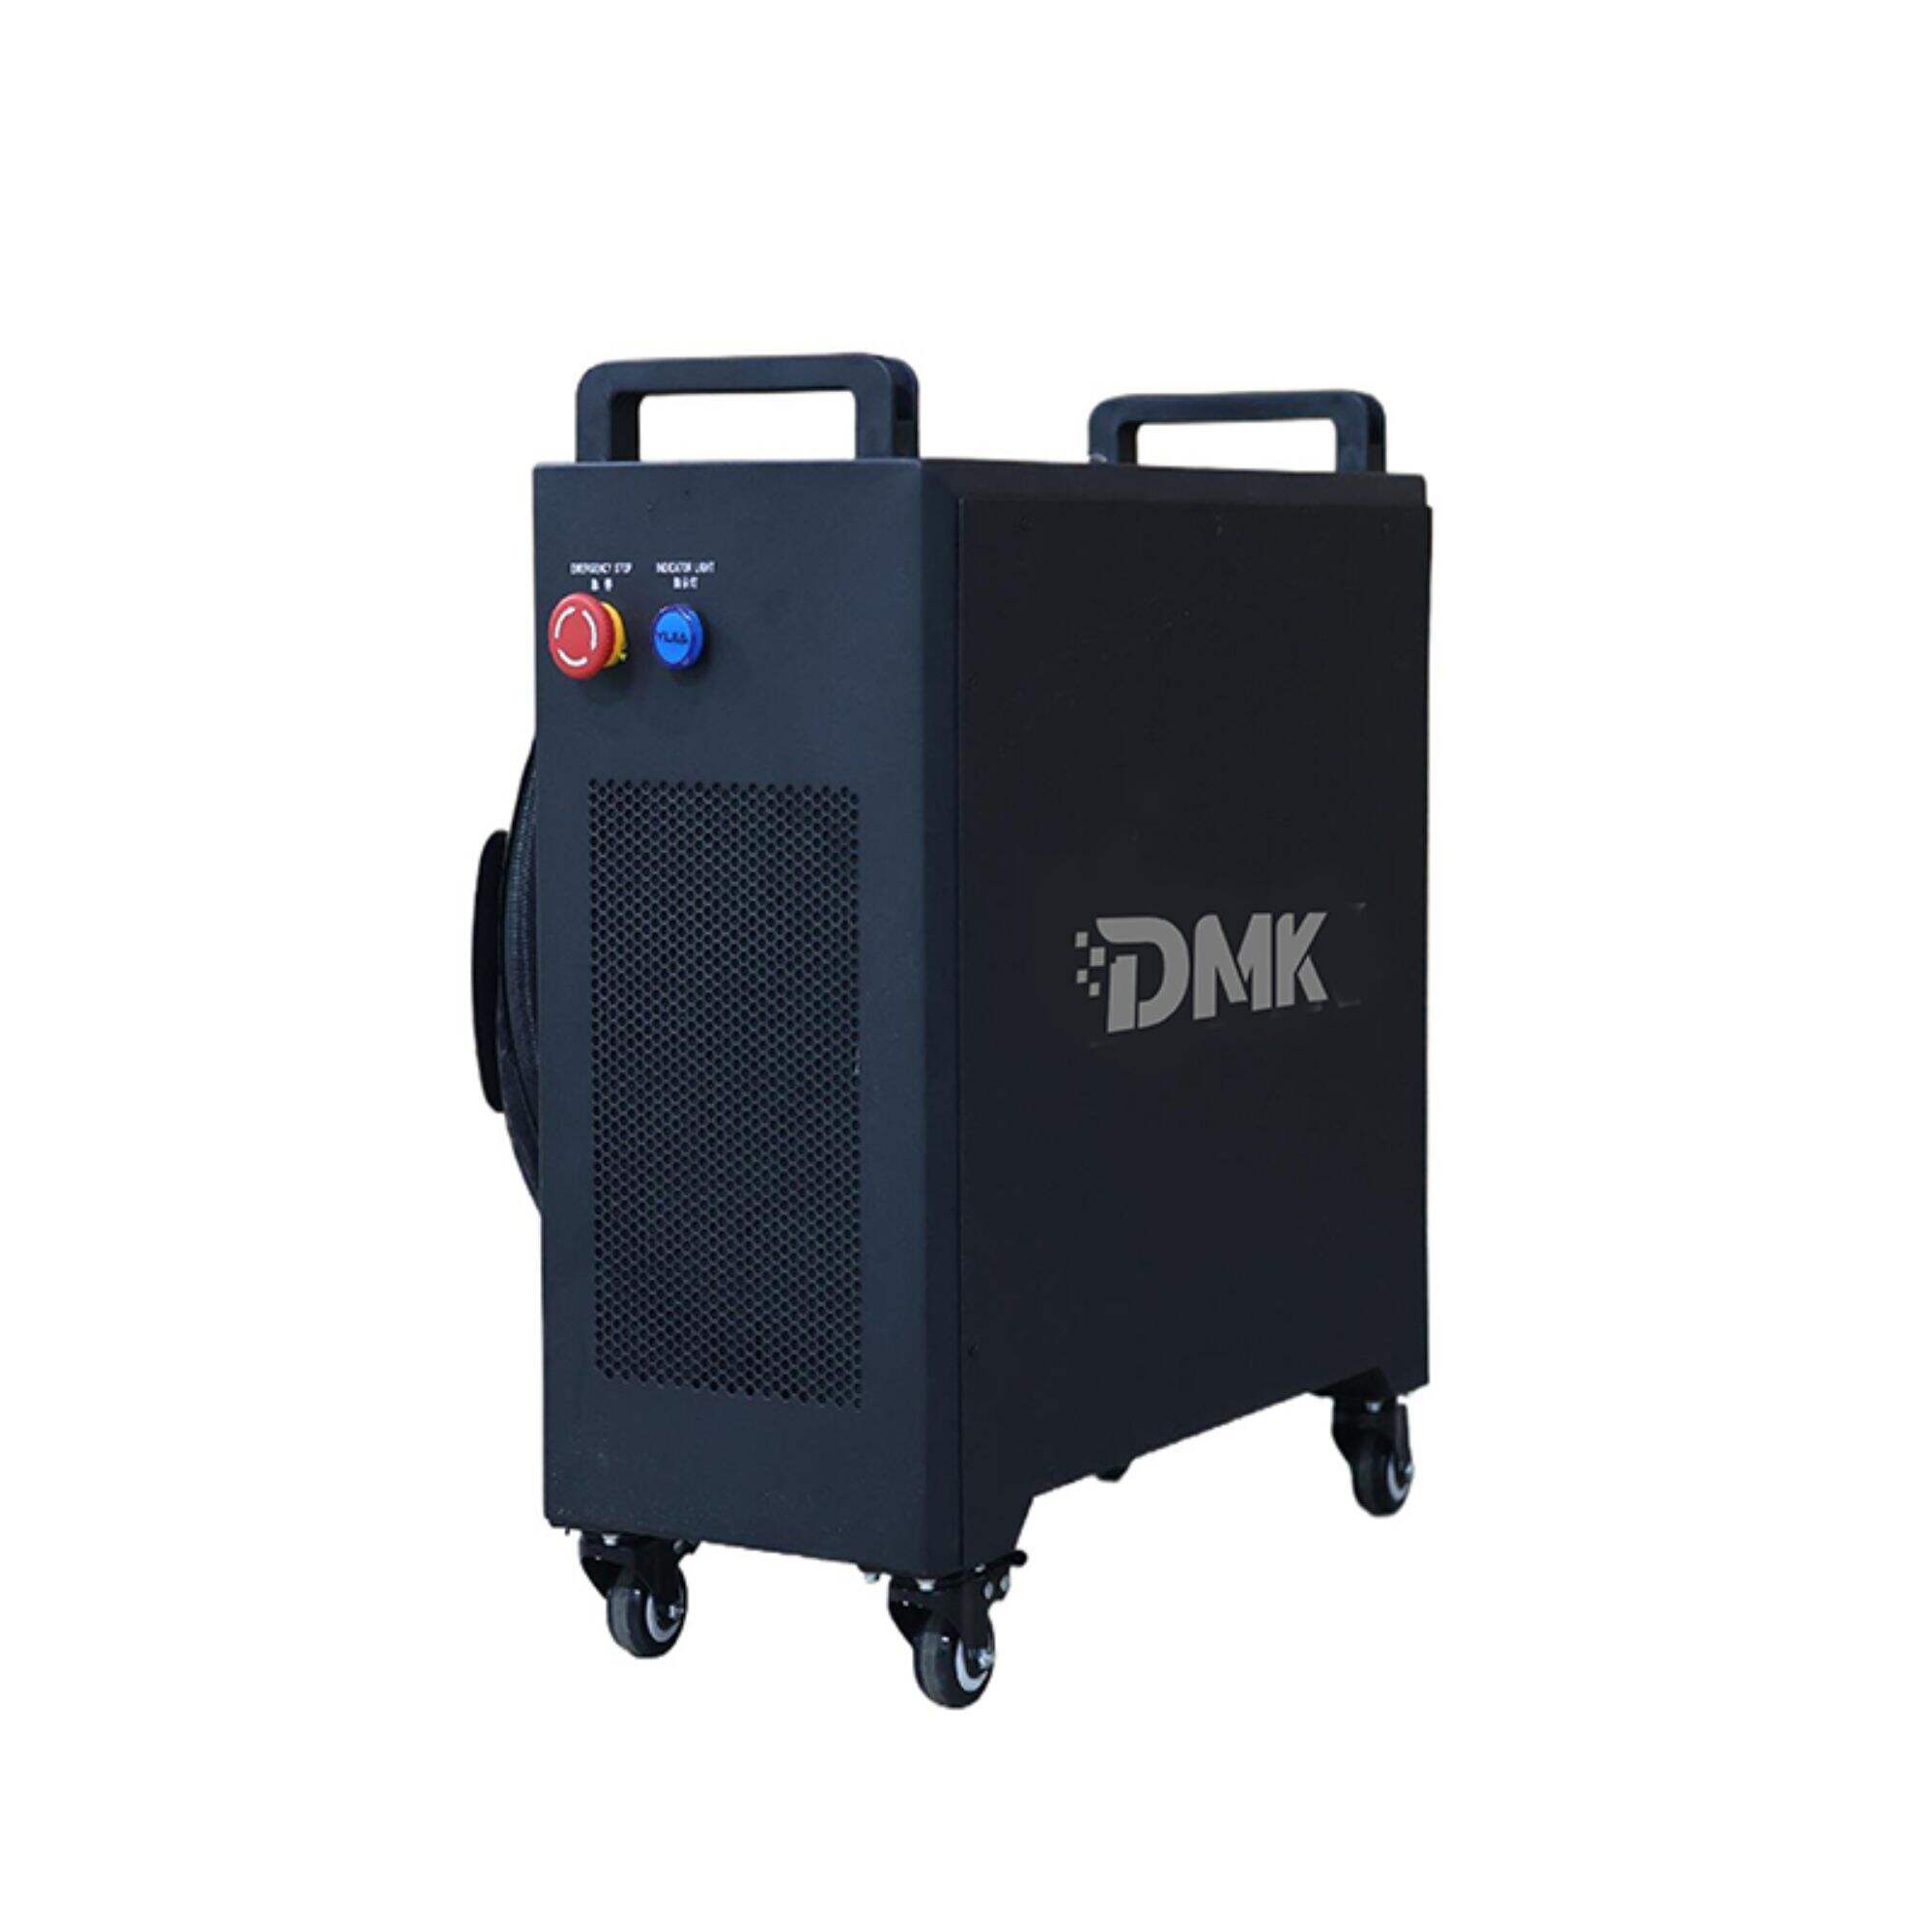 DMK 1500 ワットポータブルハンドヘルドファイバーレーザー溶接機ミニ空冷レーザー溶接機